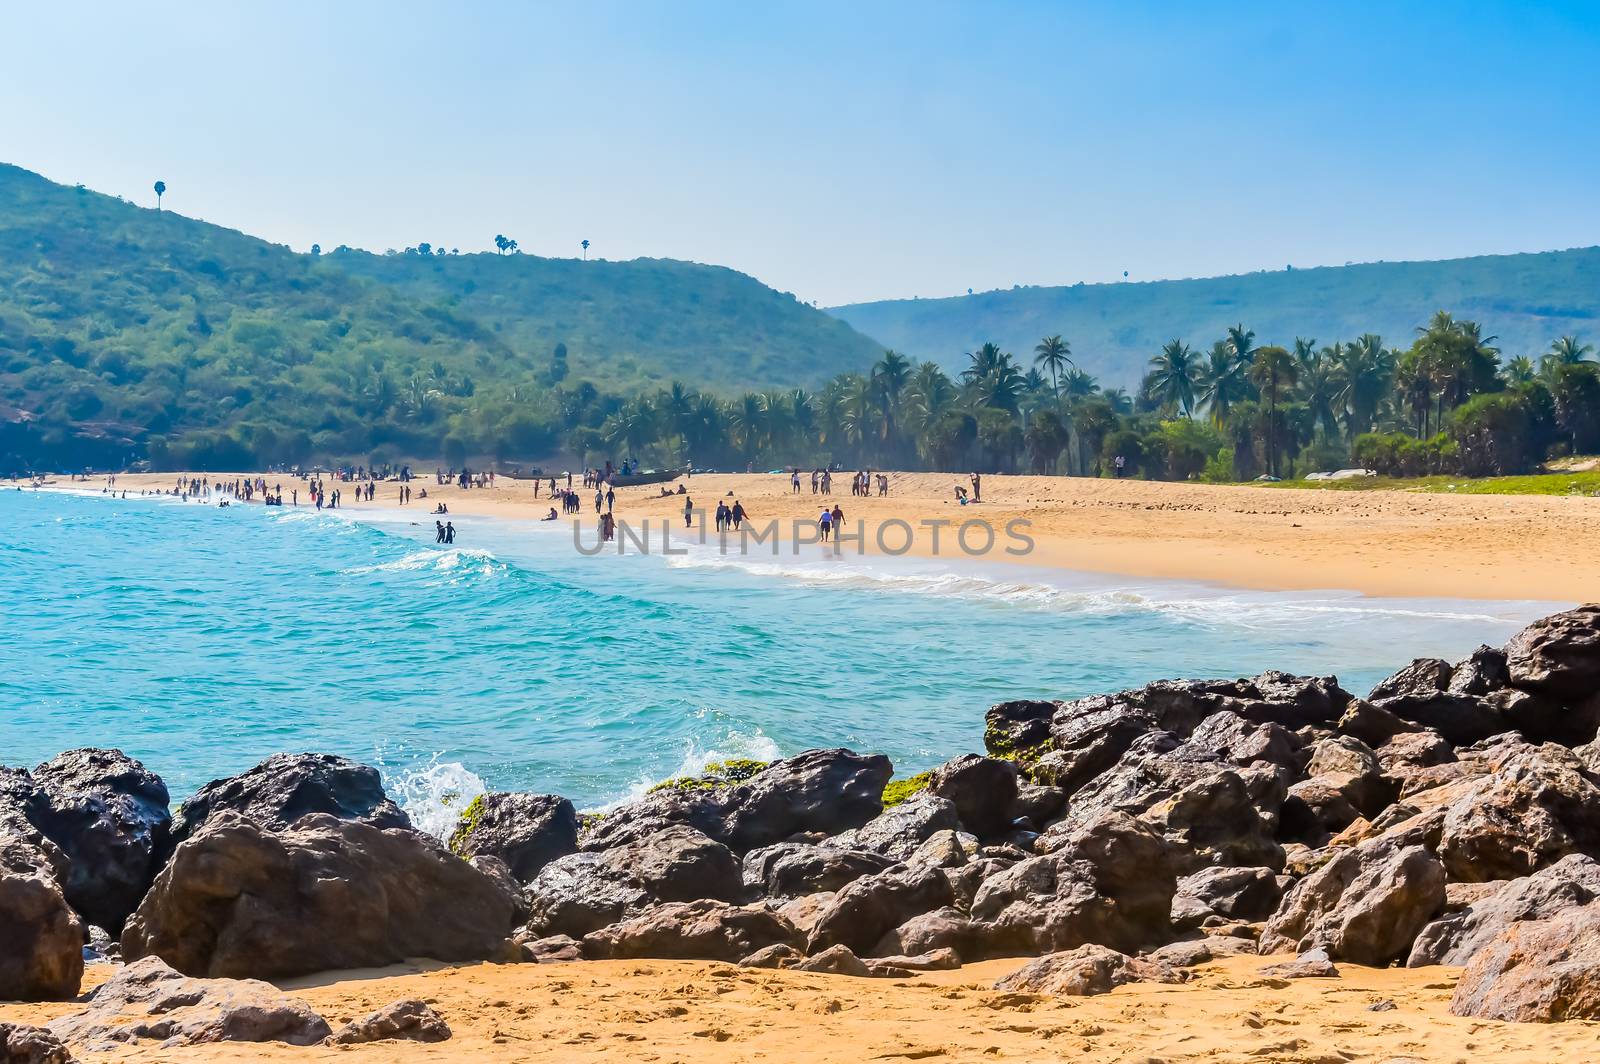 Goa Sea Beach view in sunny day by sudiptabhowmick